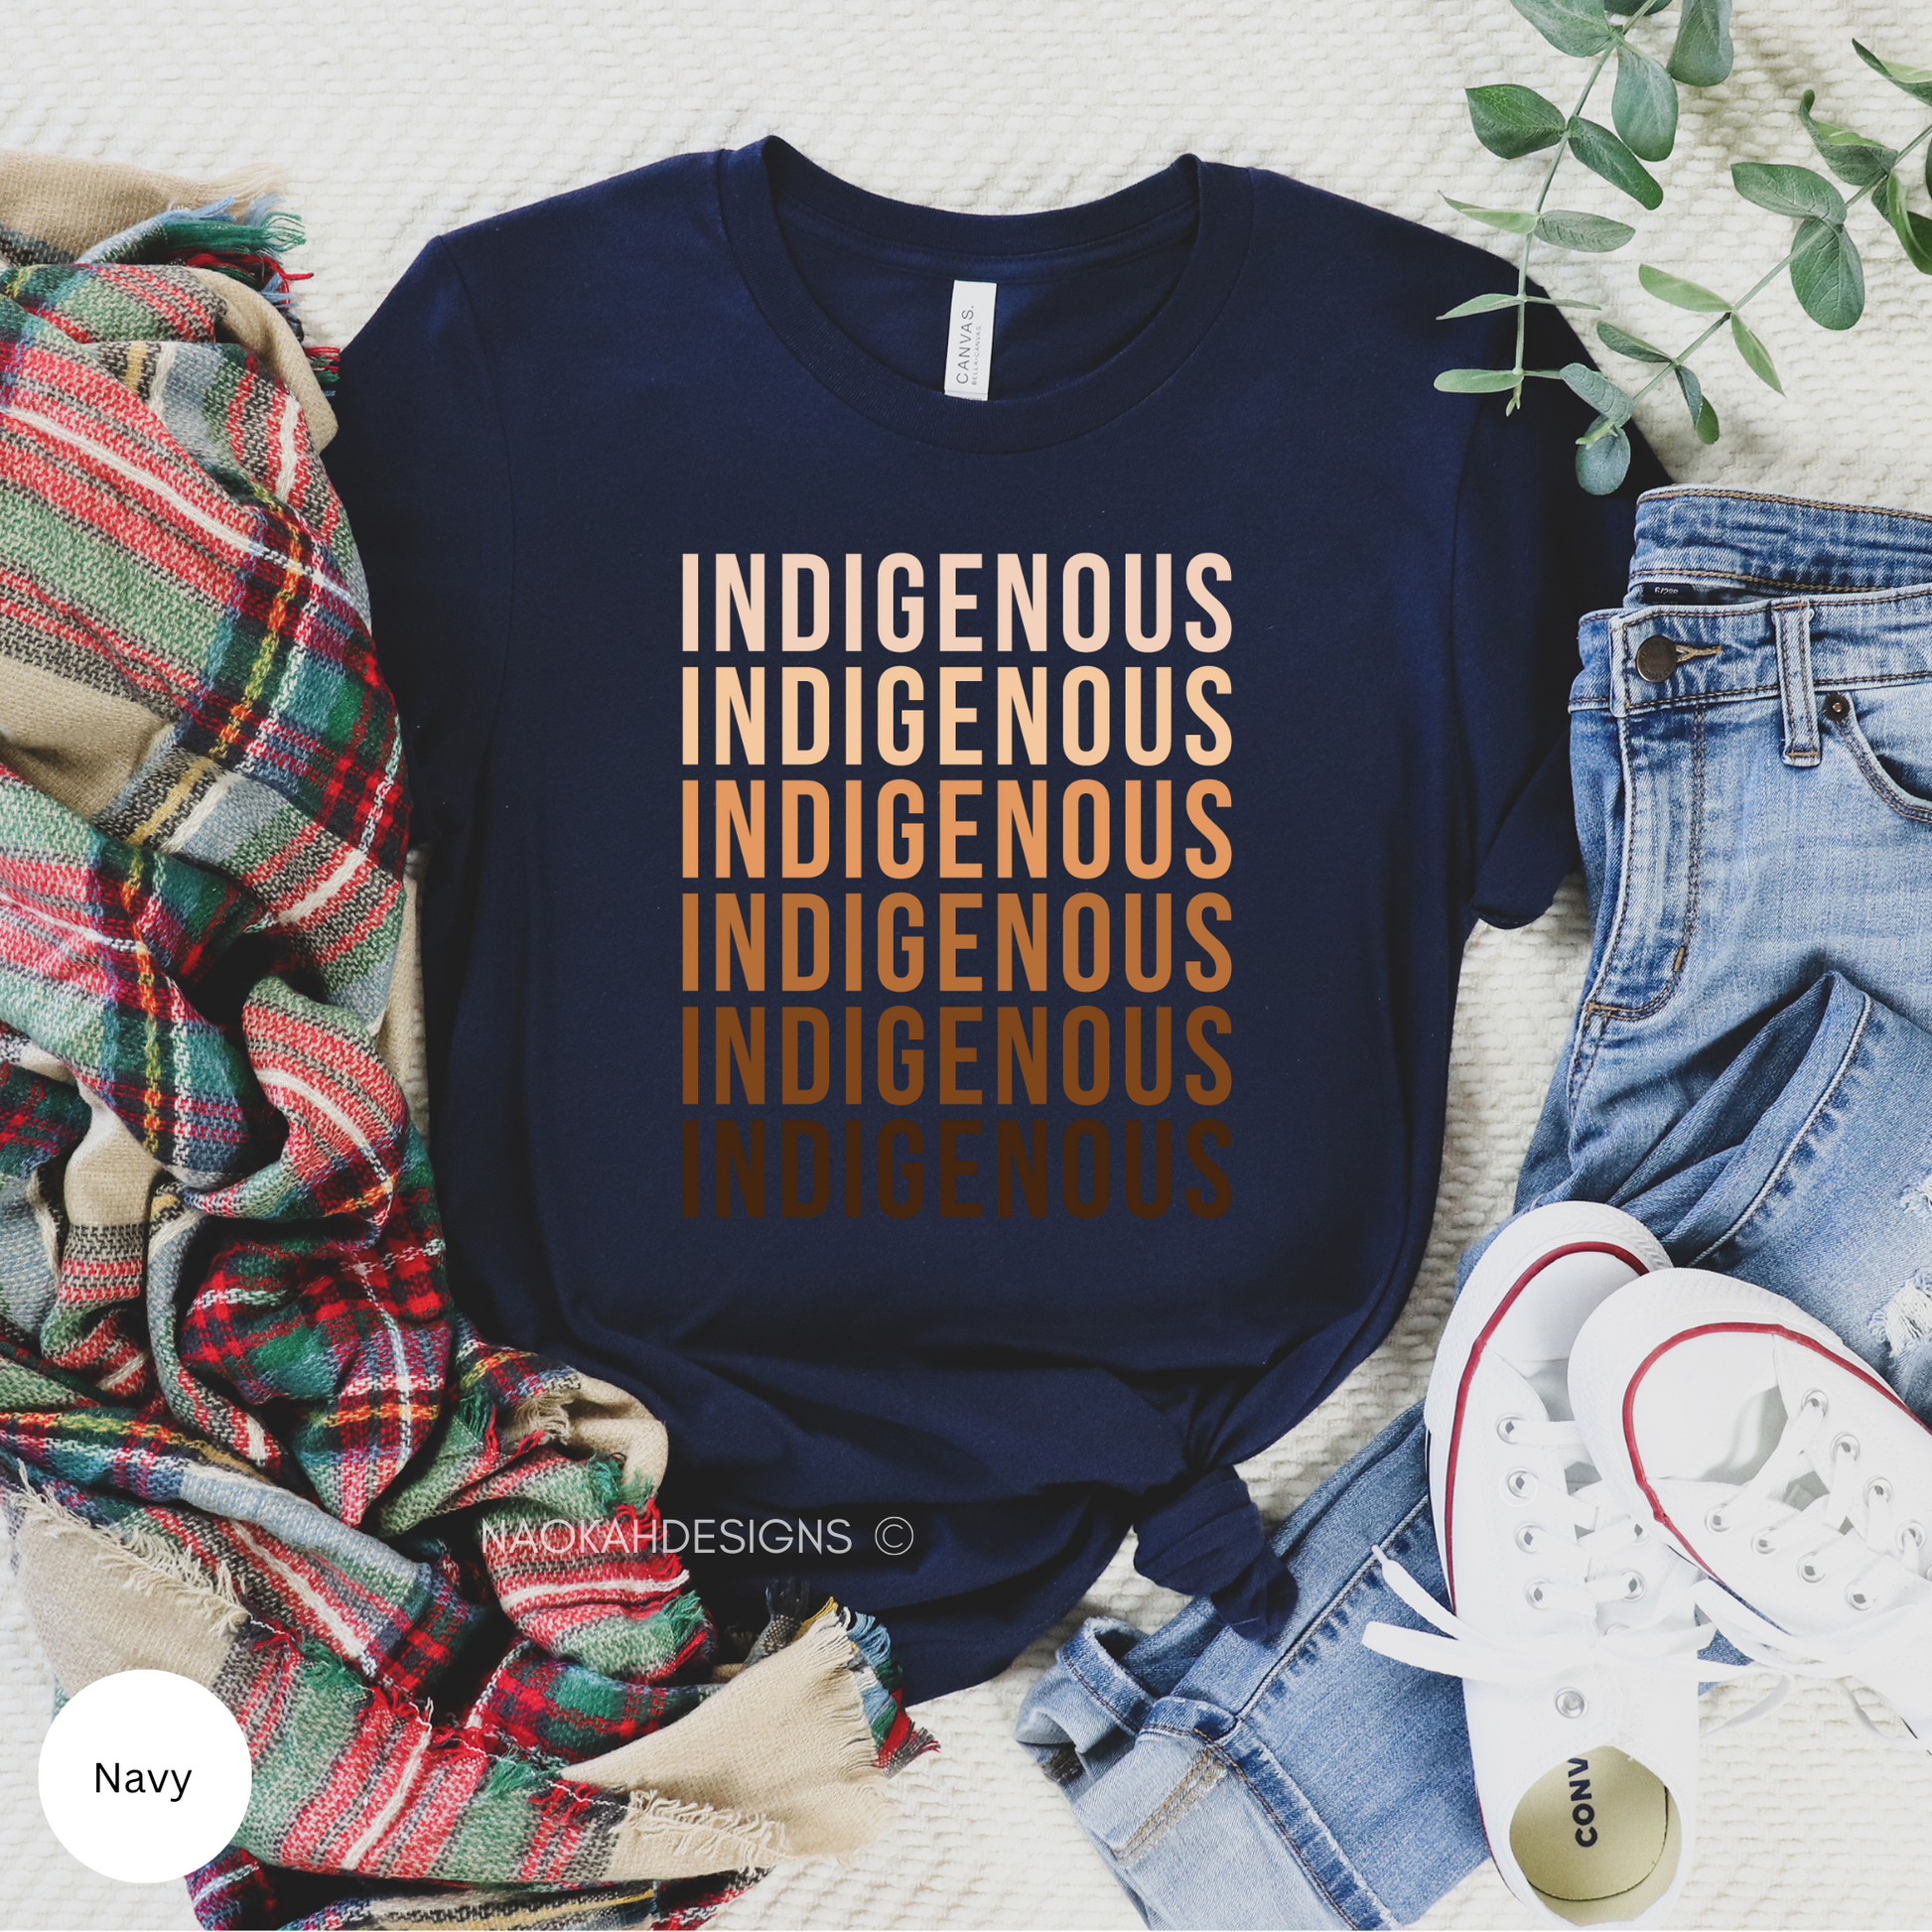 Indigenous Shirt, Indigenous Pride, Indigenous Resilient Shirt, Native Rights Shirt, Indigenous melanin shirt, Indigenous repeated words tee